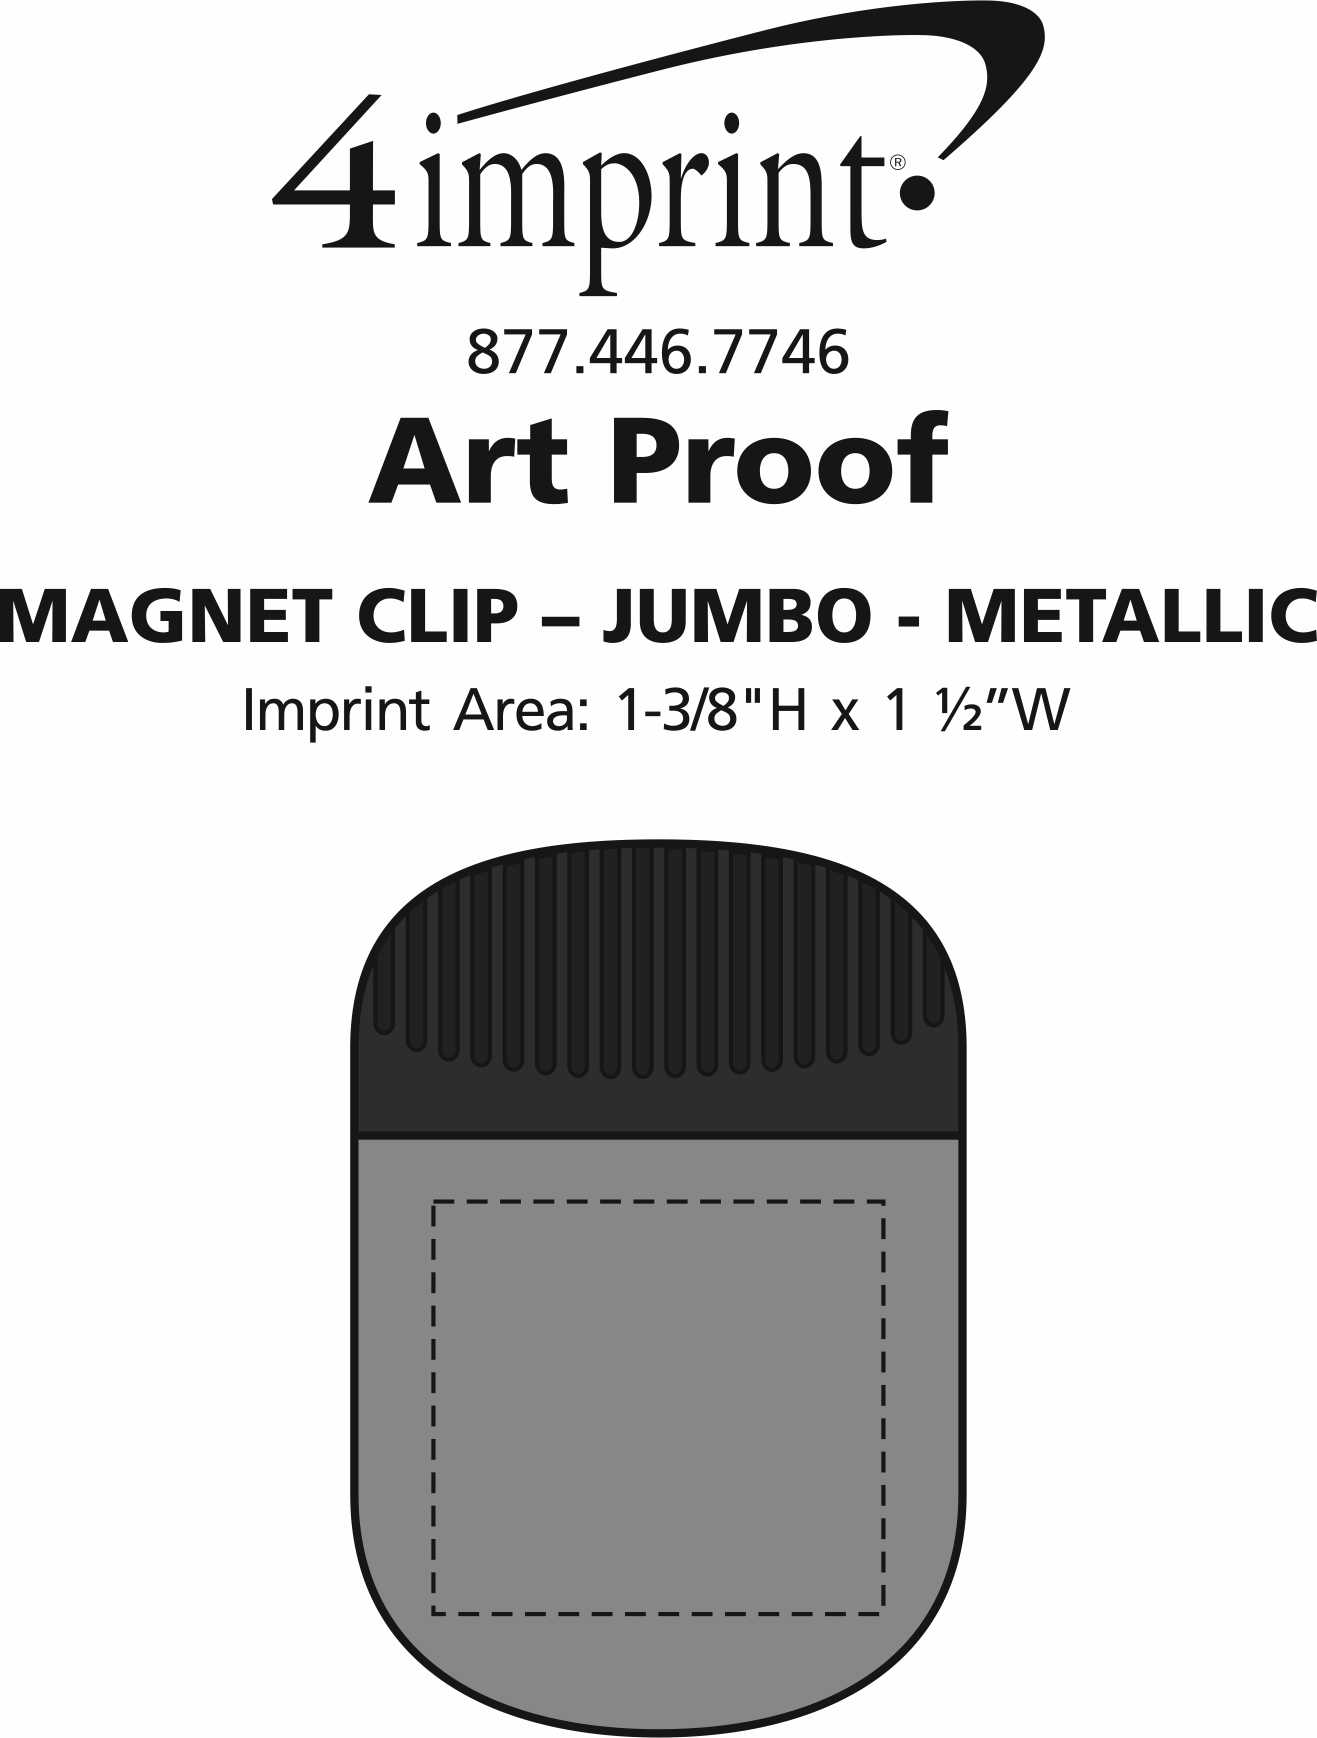 Imprint Area of Magnet Clip - Jumbo - Metallic